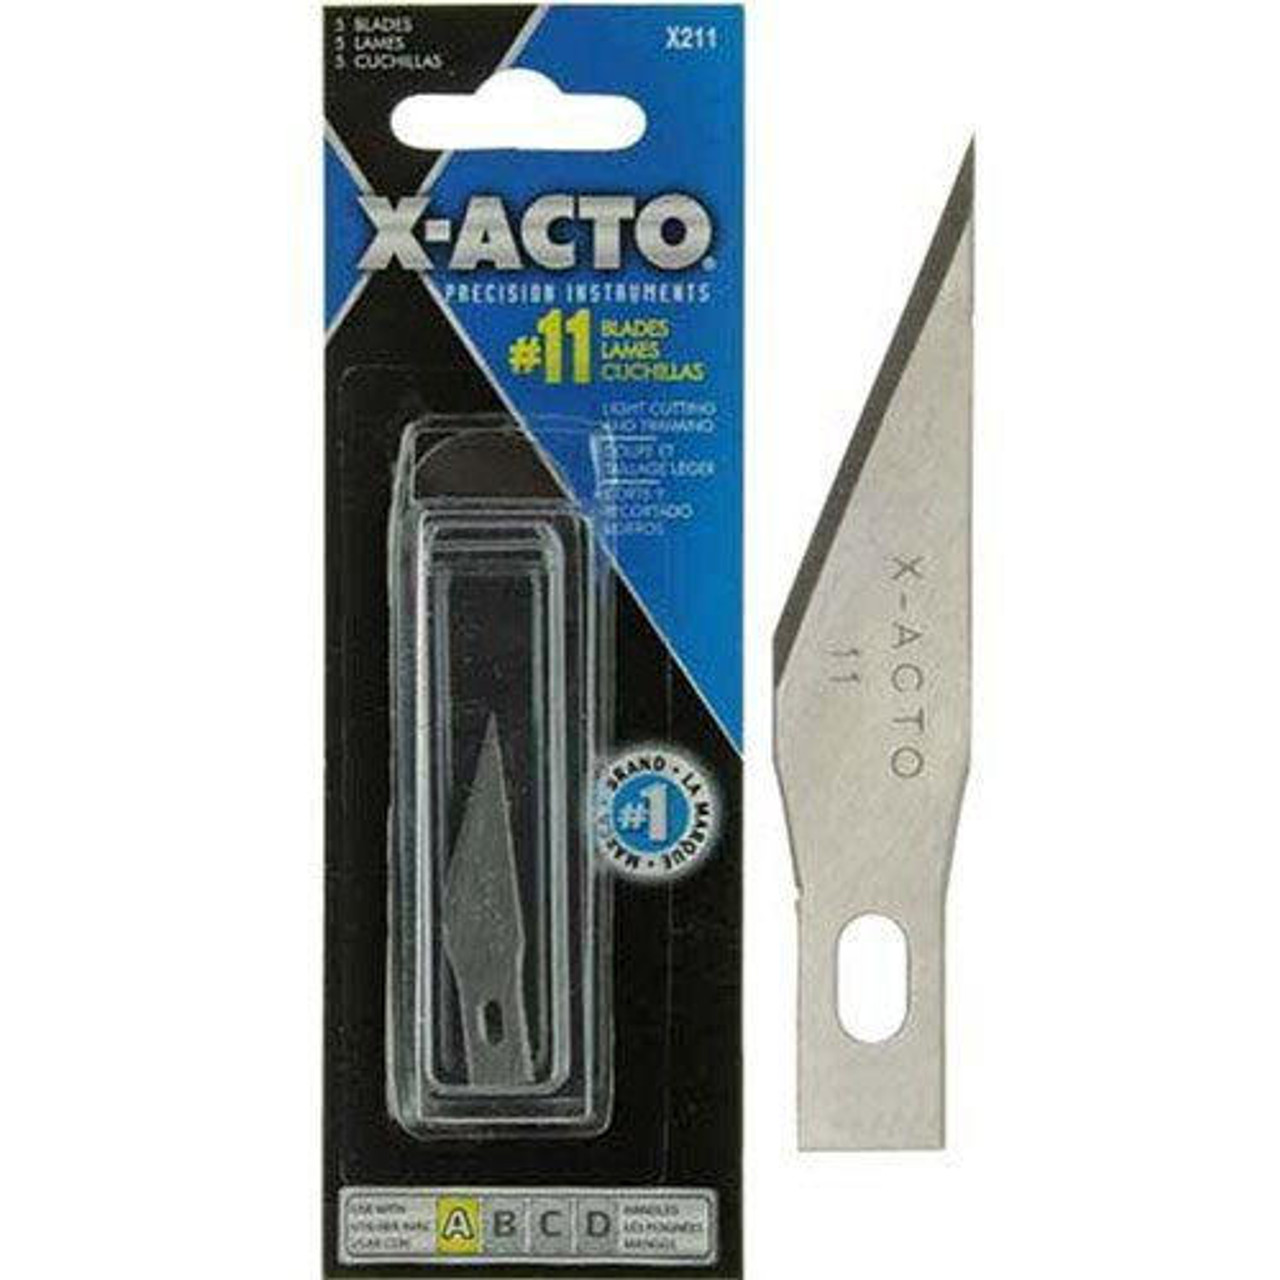 Xacto Blades - Z Series - #11 Blades - 5pk - Sam Flax Atlanta